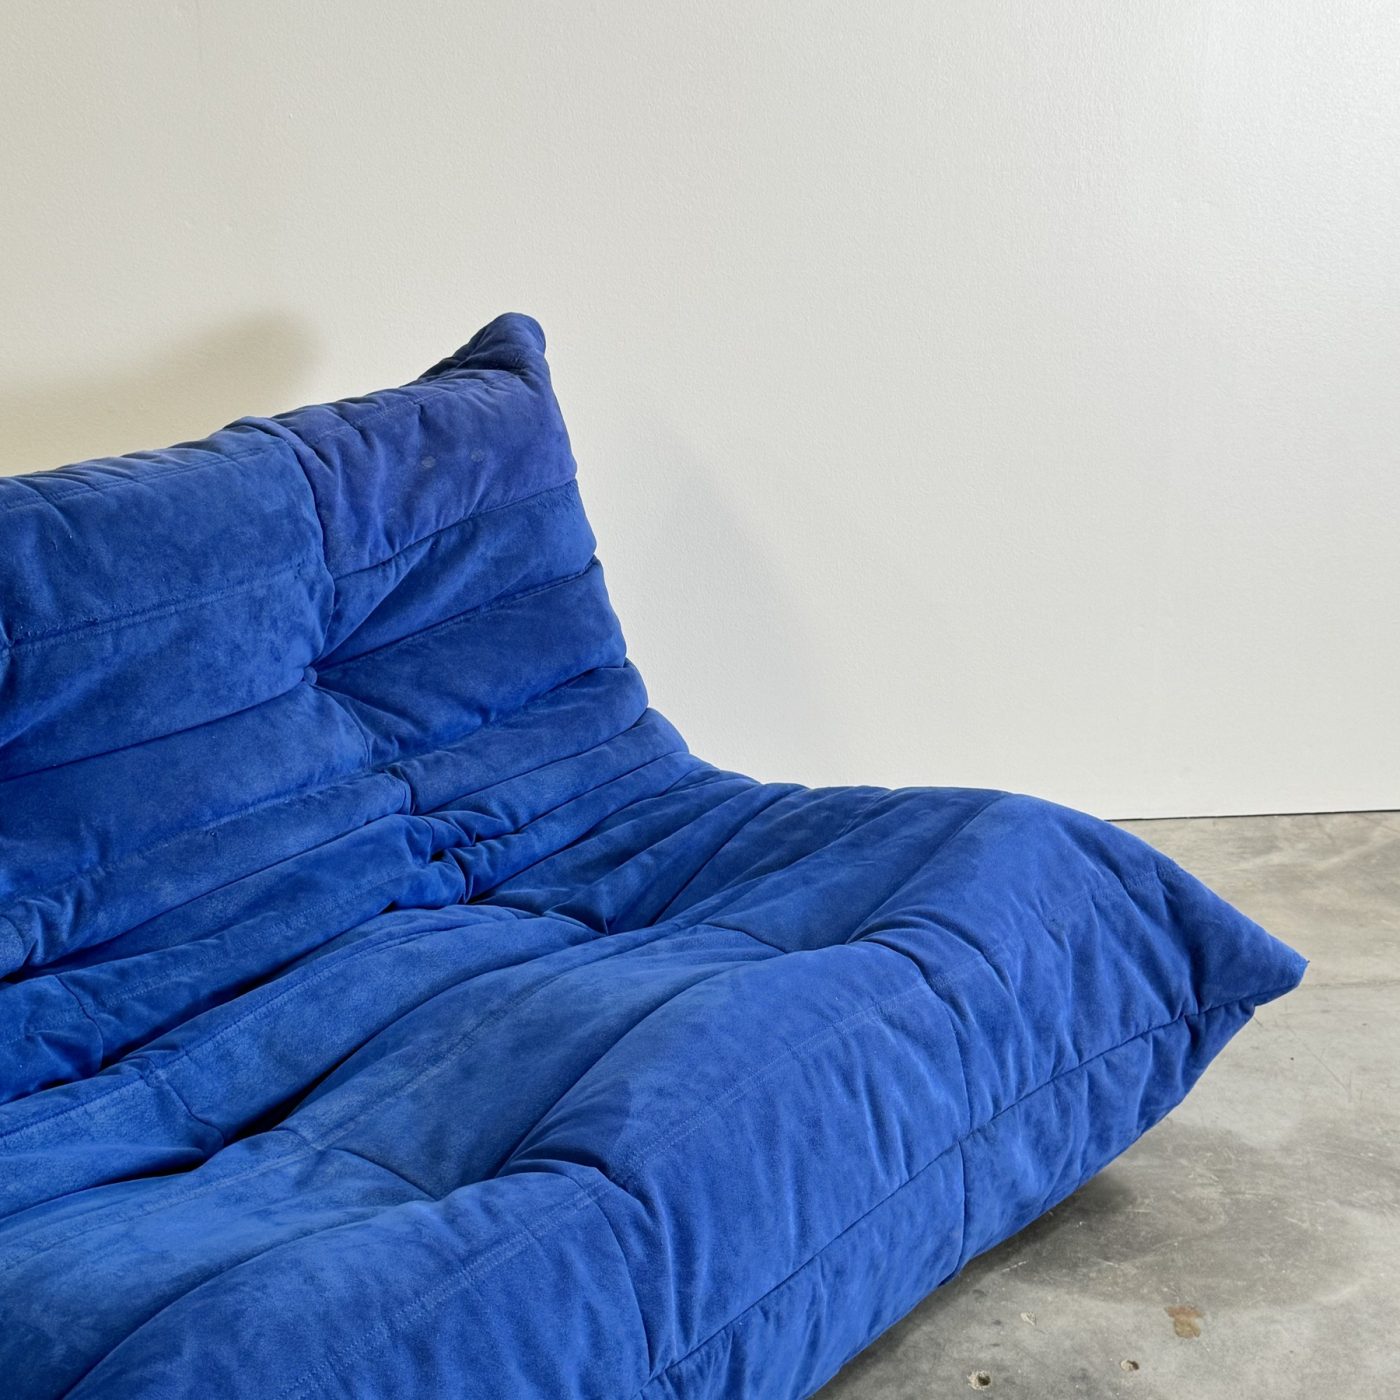 objet-vagabond-togo-sofa0001